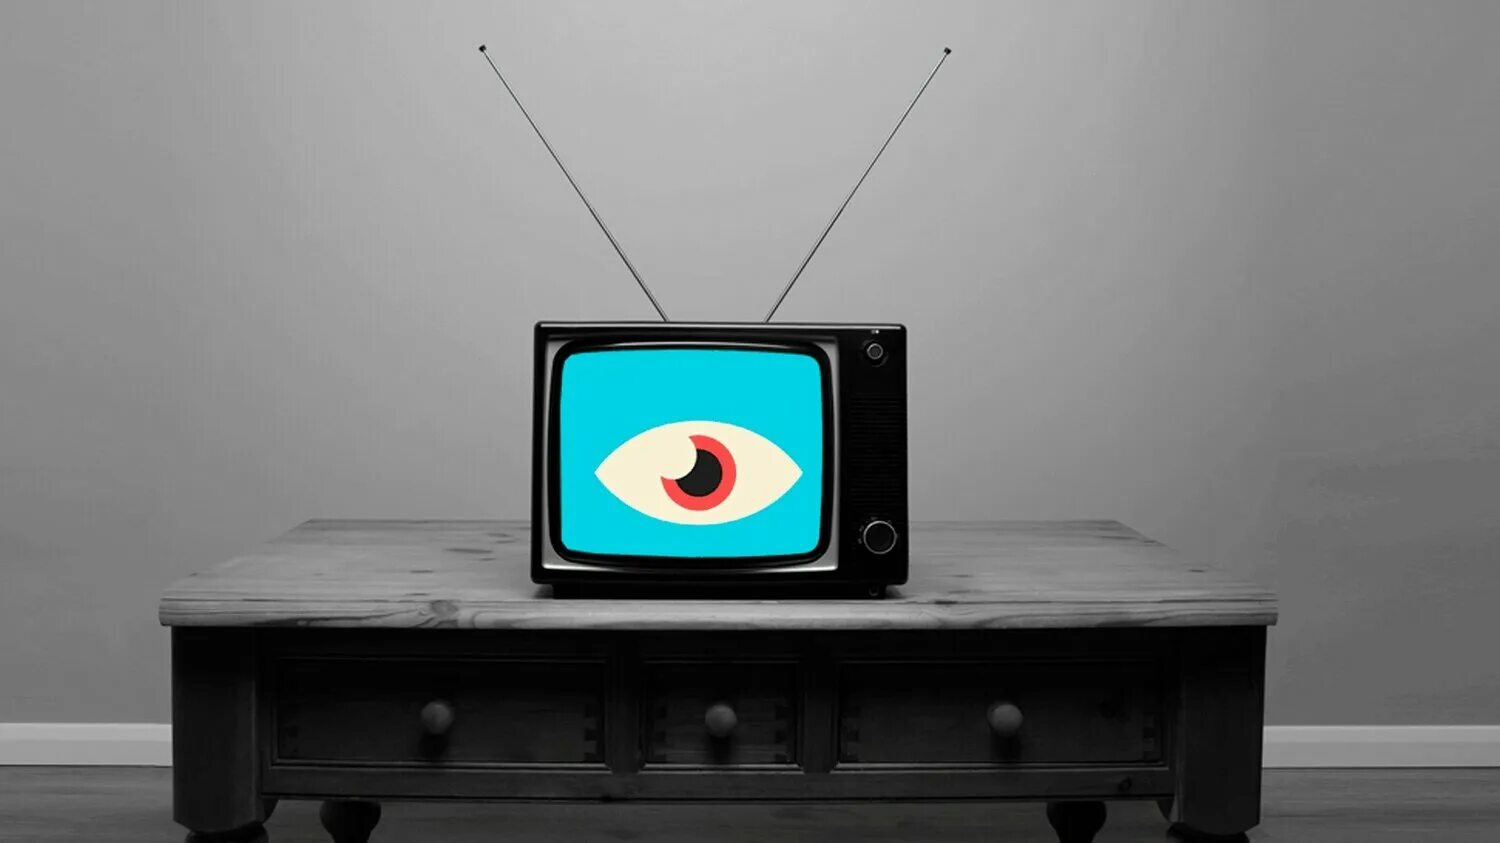 Телевизор. Старый телевизор. Телевизор арт. Страшный телевизор.